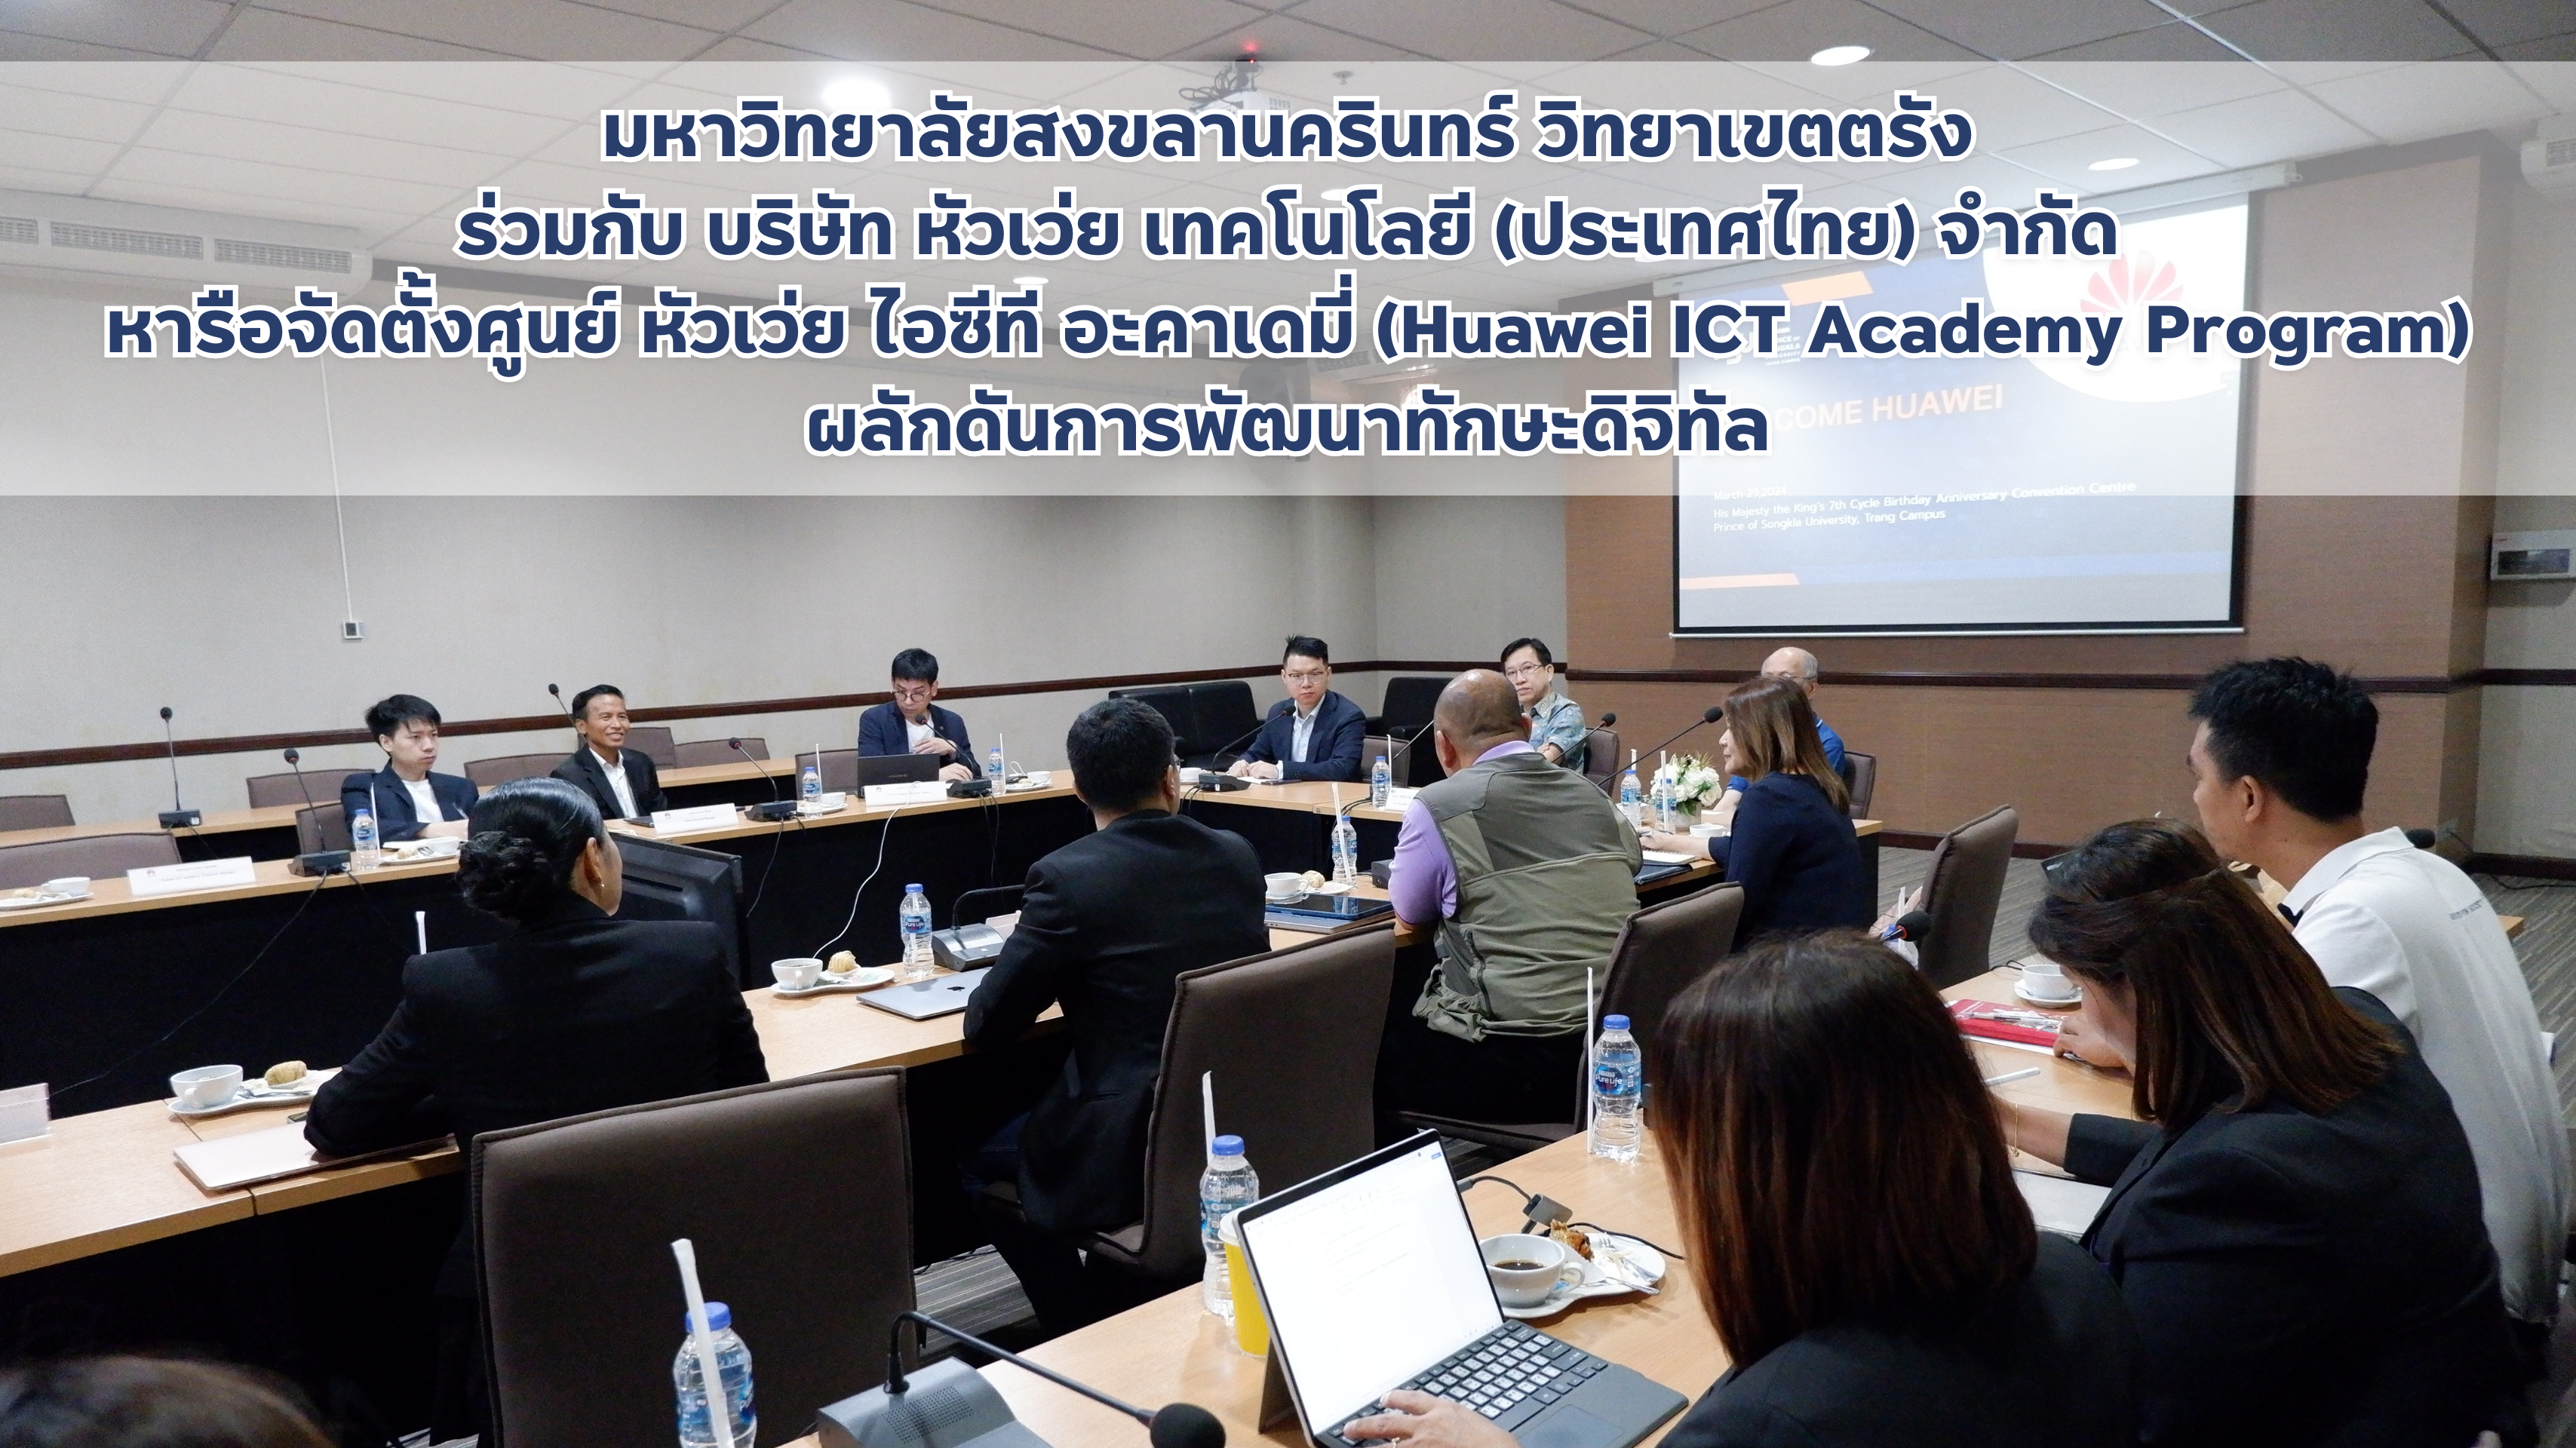 You are currently viewing มหาวิทยาลัยสงขลานครินทร์ วิทยาเขตตรัง ร่วมกับบริษัท หัวเว่ย เทคโนโลยี (ประเทศไทย) จำกัด หารือจัดตั้งศูนย์ หัวเว่ย ไอซีที อะคาเดมี่ (Huawei ICT Academy Program) ผลักดันการพัฒนาทักษะดิจิทัล